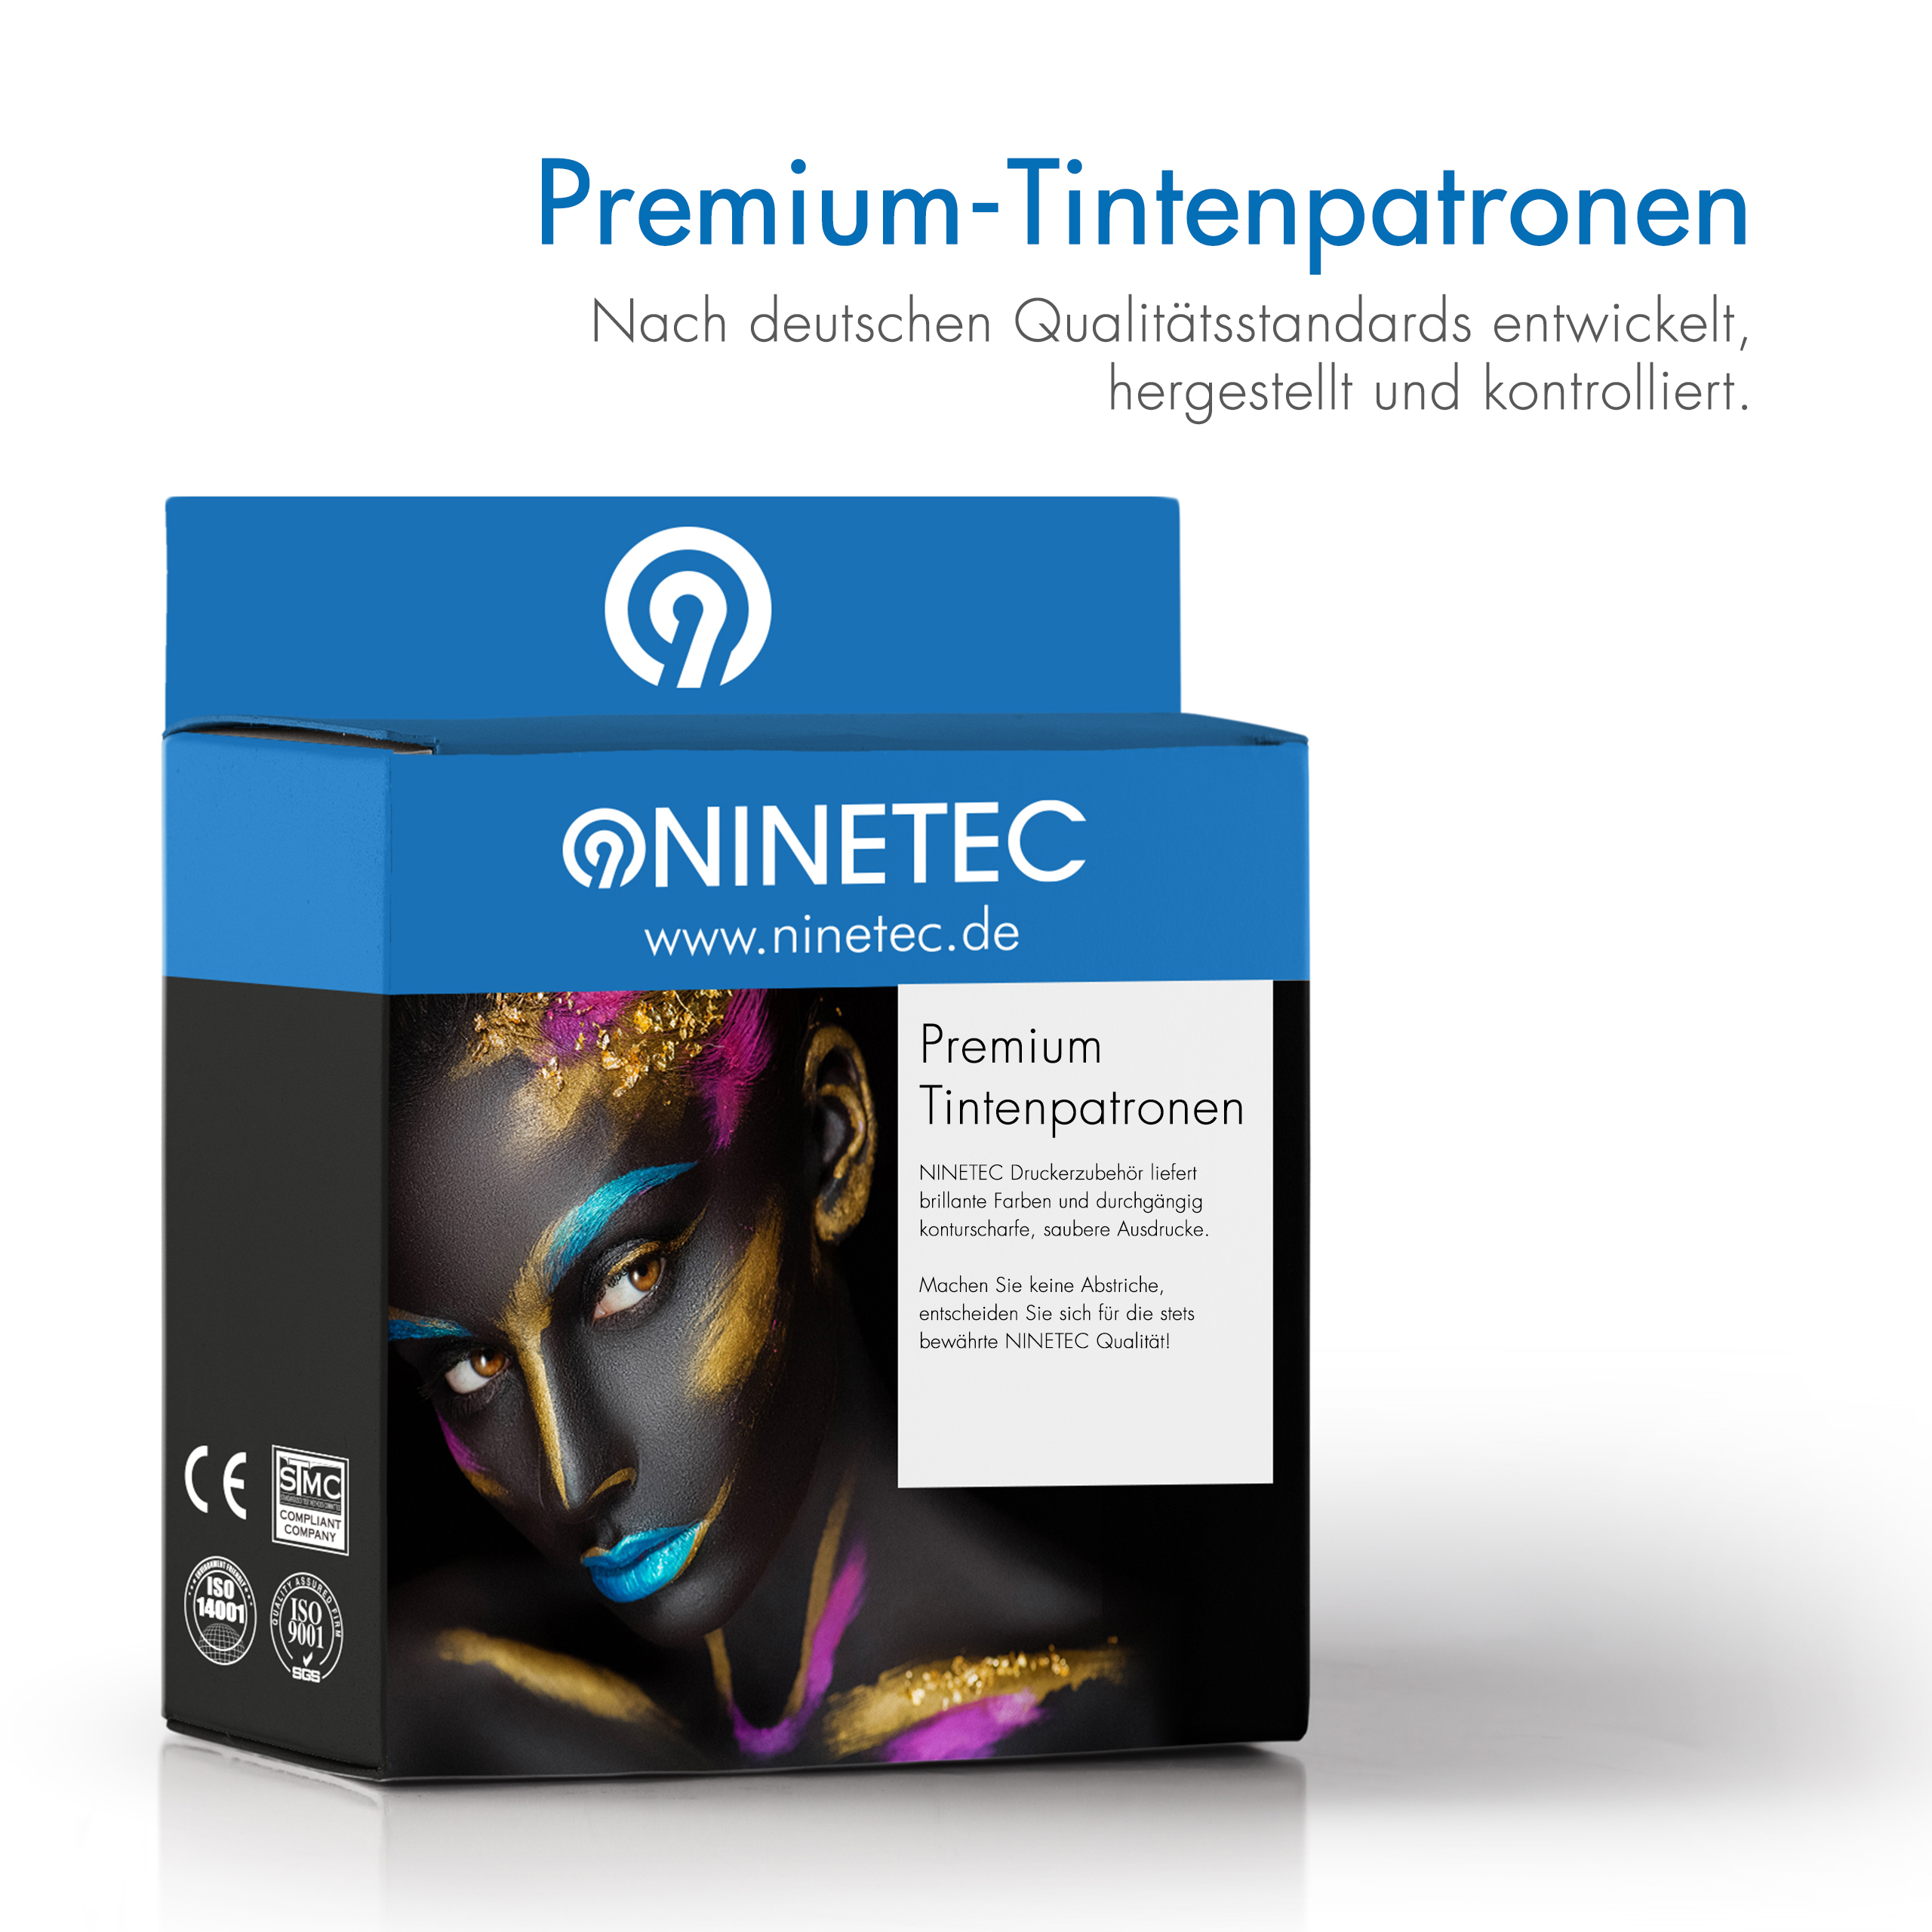 (T6M07AE) Tintenpatrone 1 ersetzt Patrone 903XL NINETEC magenta HP